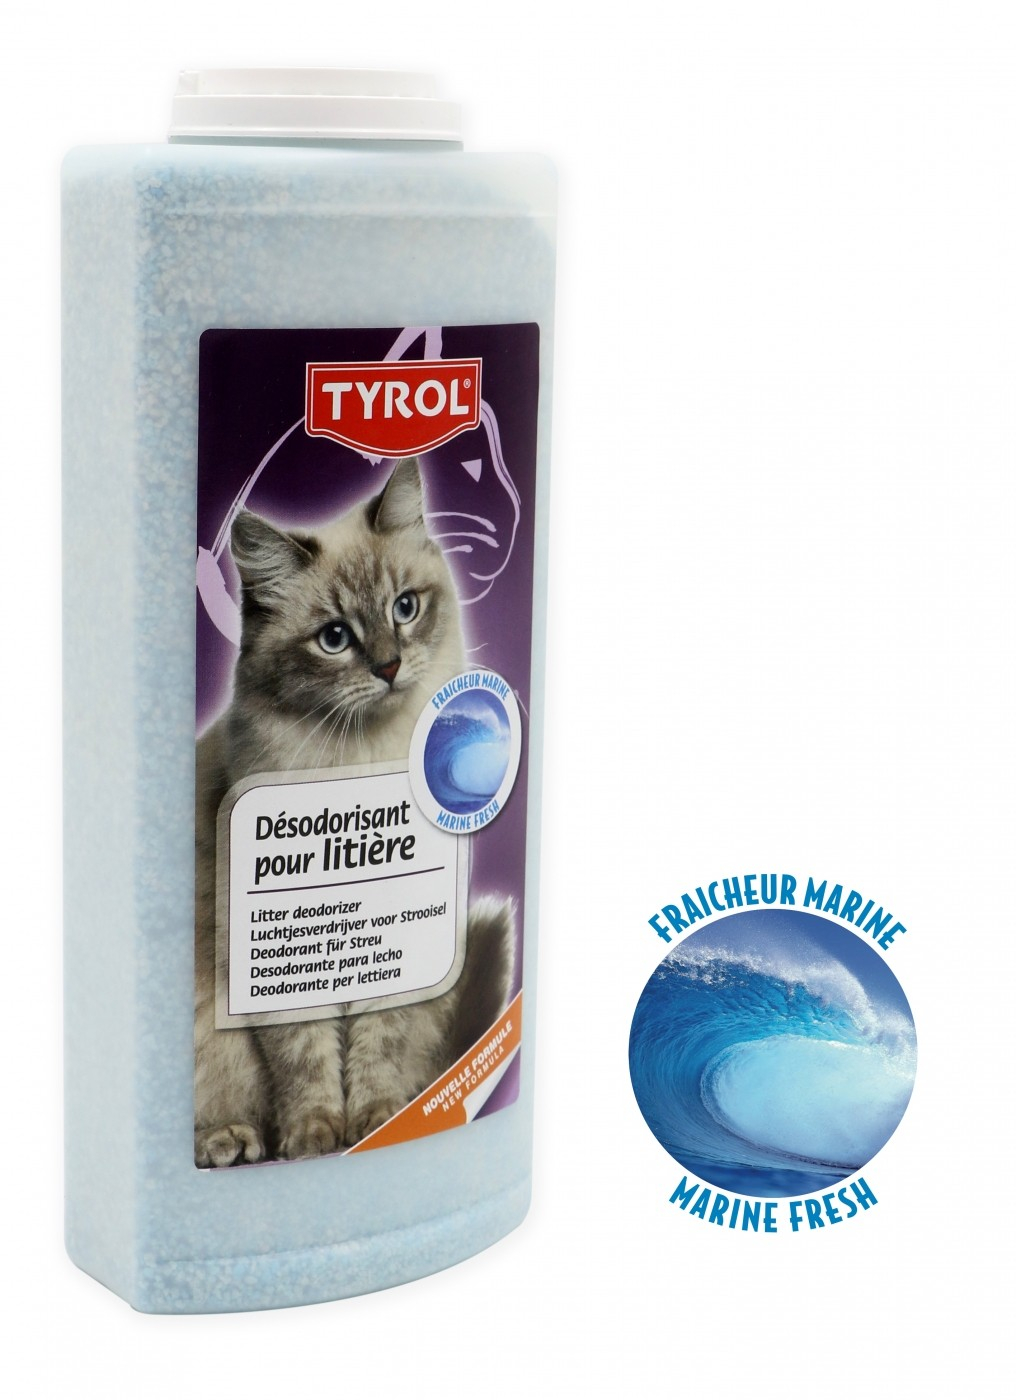 Desodorante para arena de gato